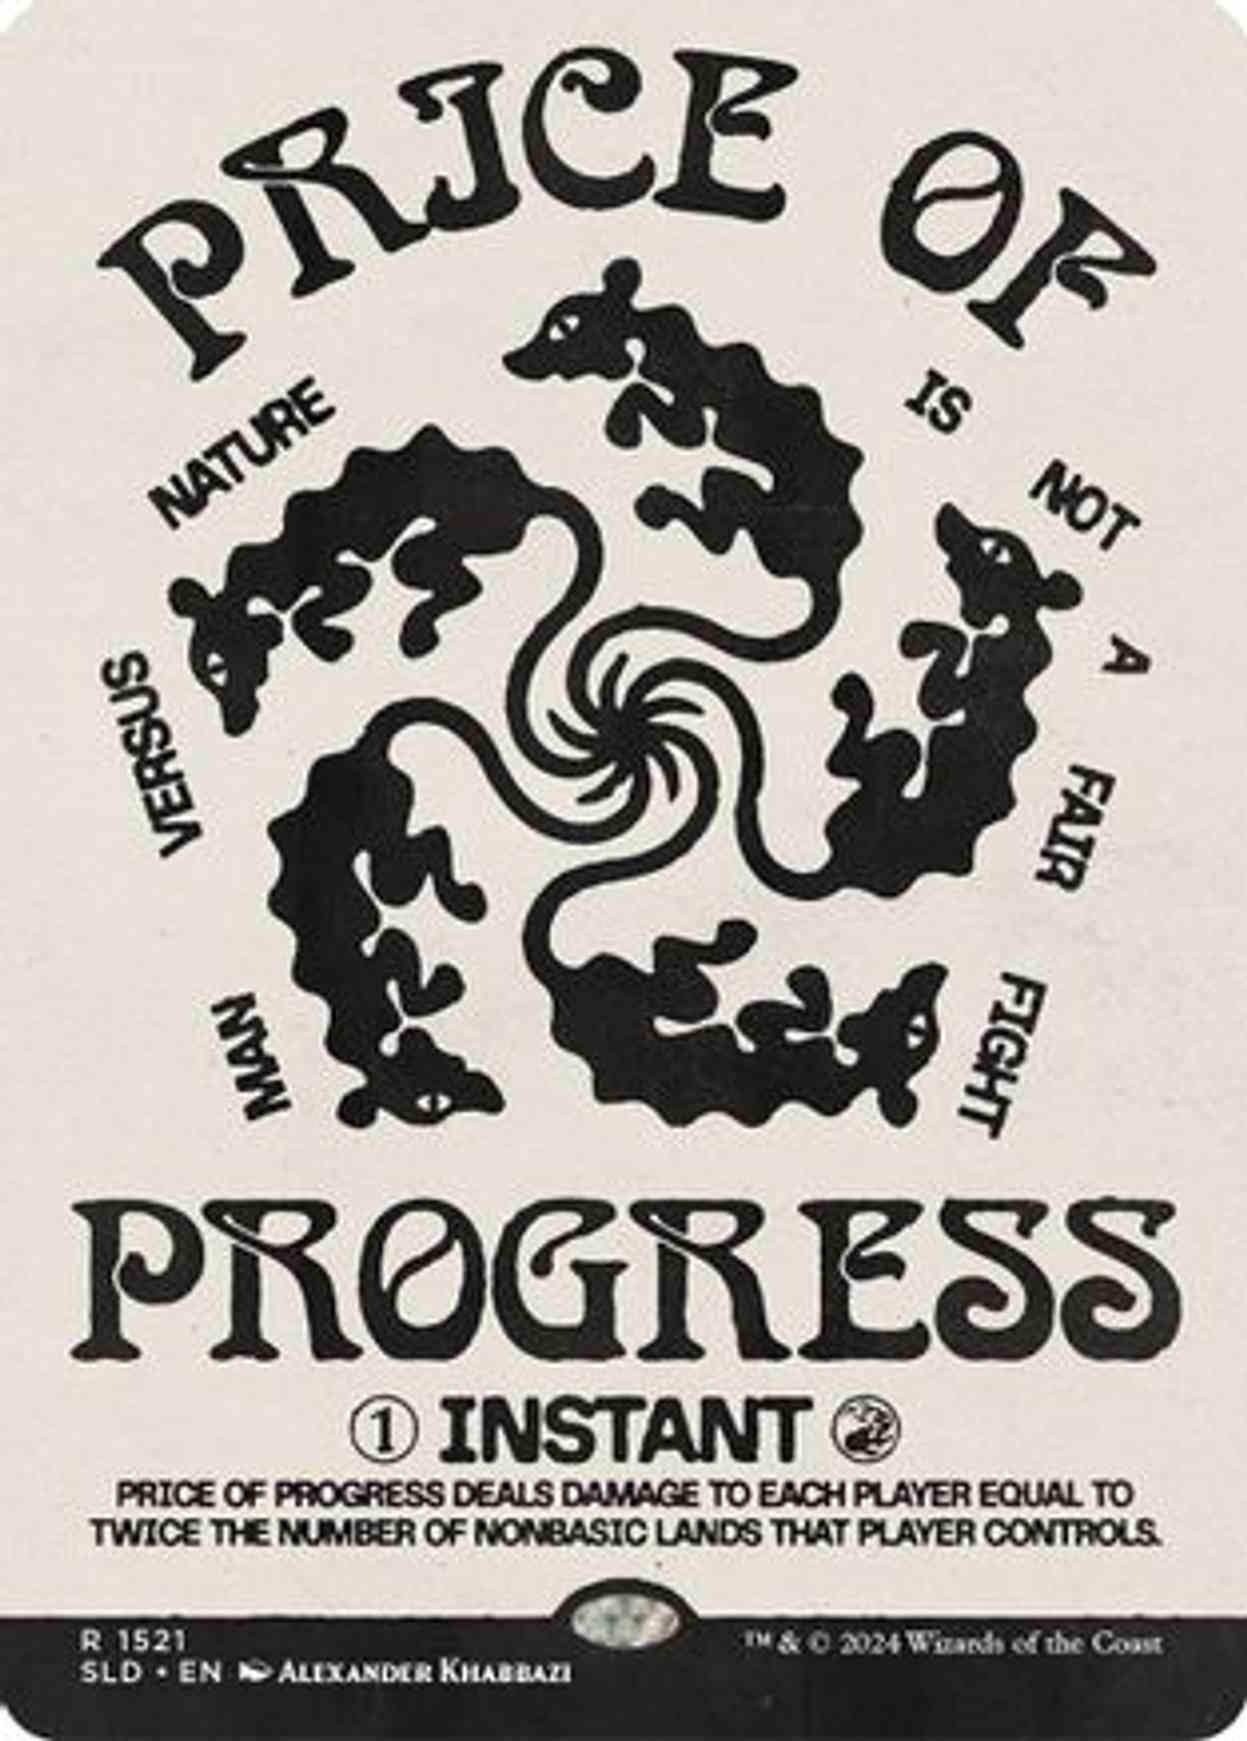 Price of Progress magic card front